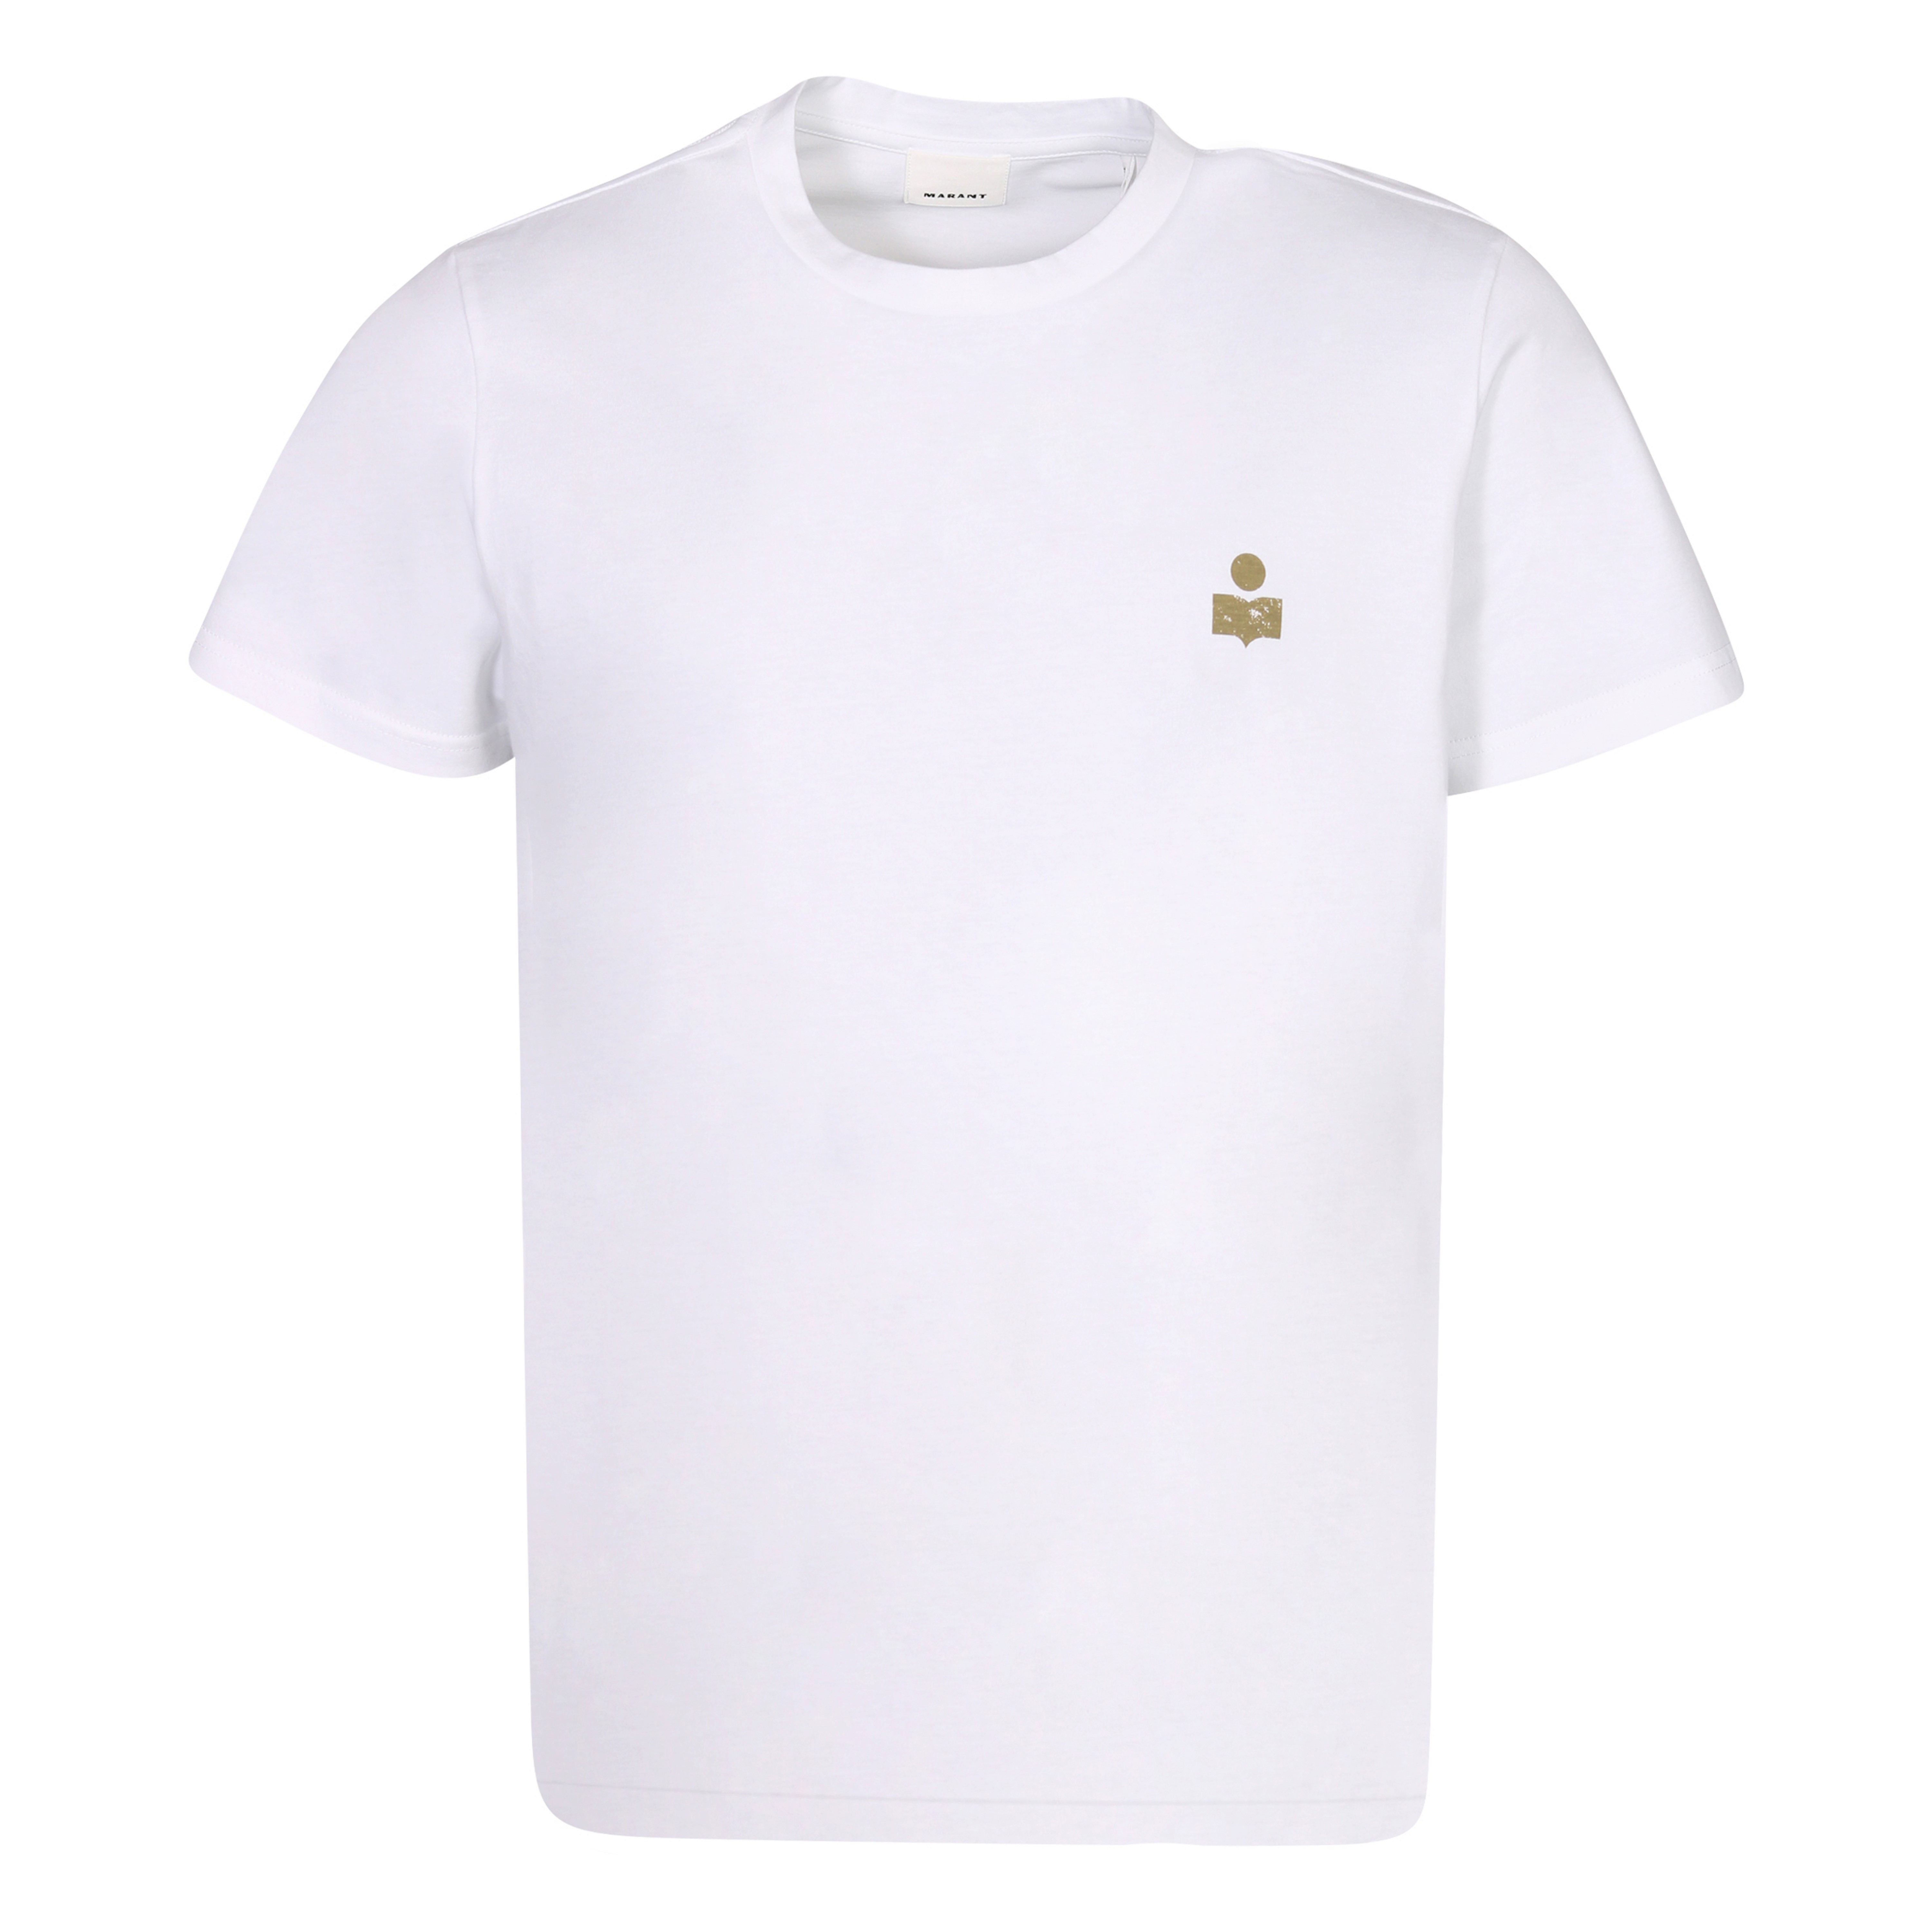 Isabel Marant Zafferh T-Shirt in White/Khaki